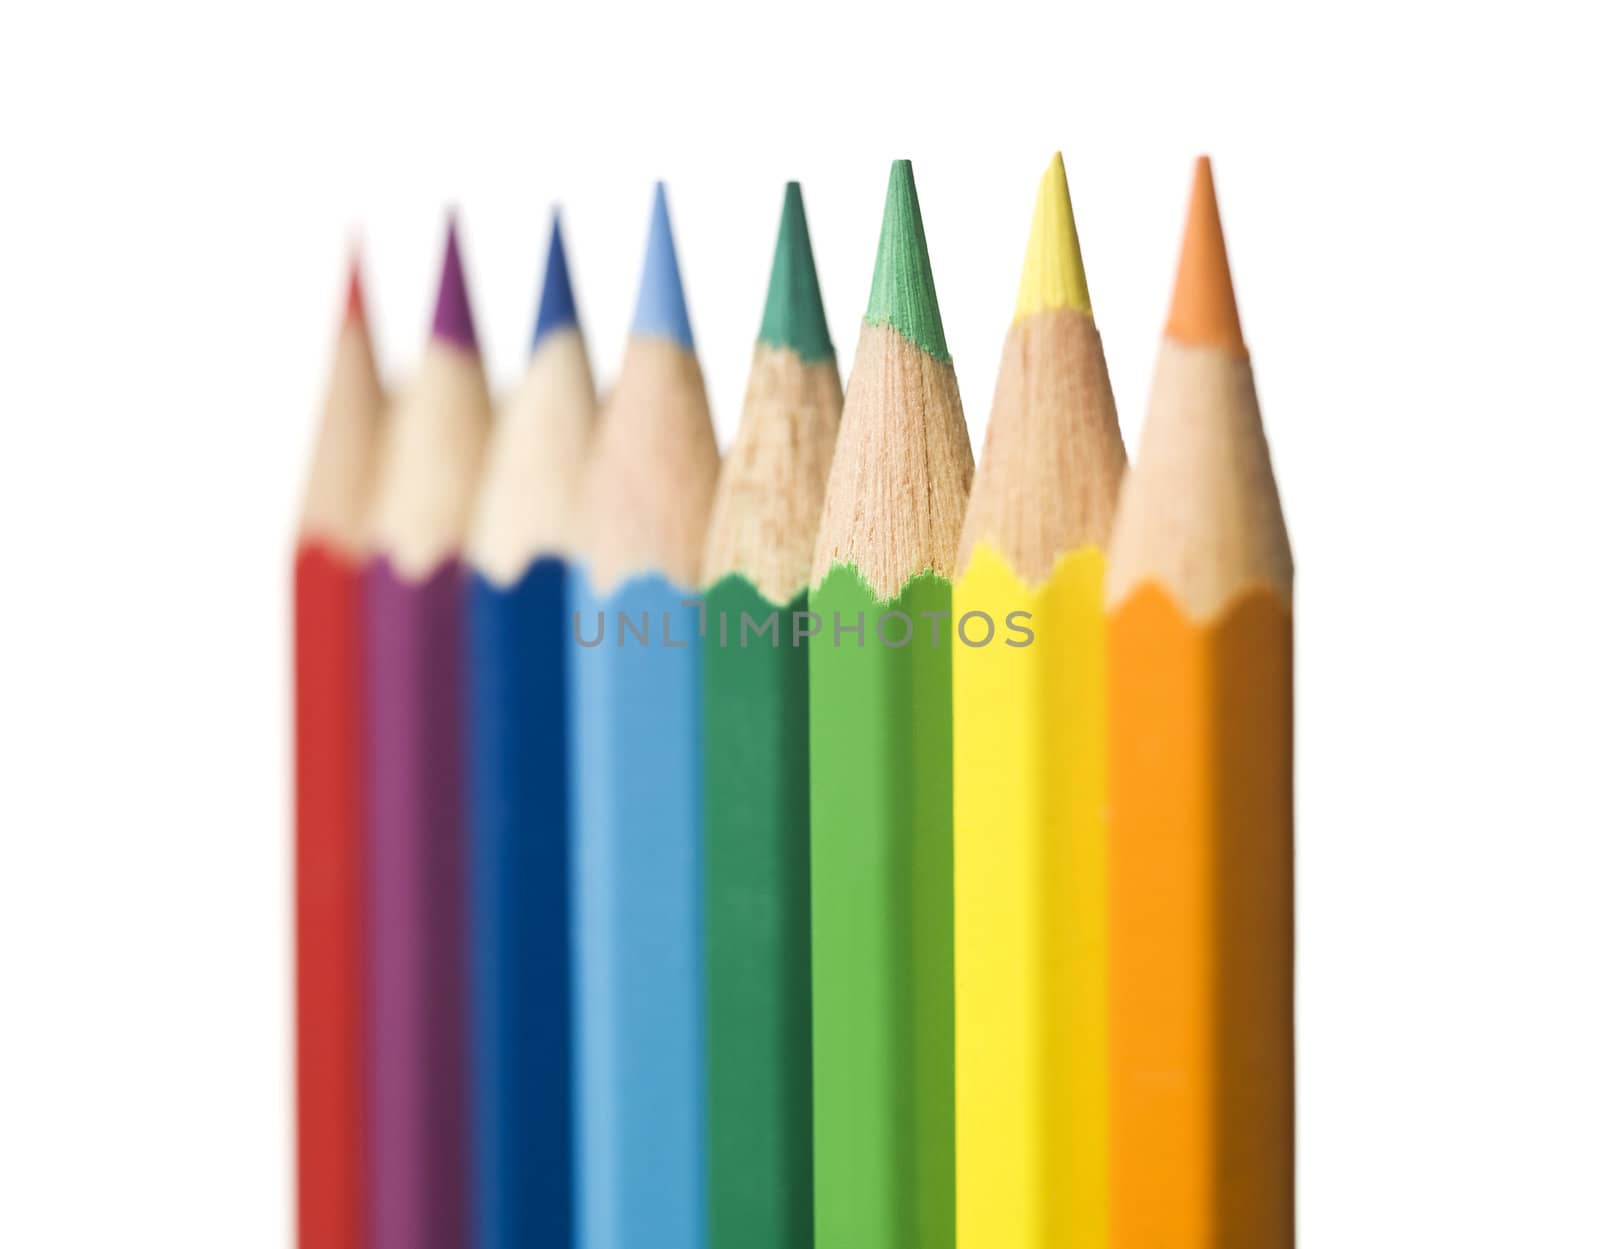 Row of colourd pencils by gemenacom